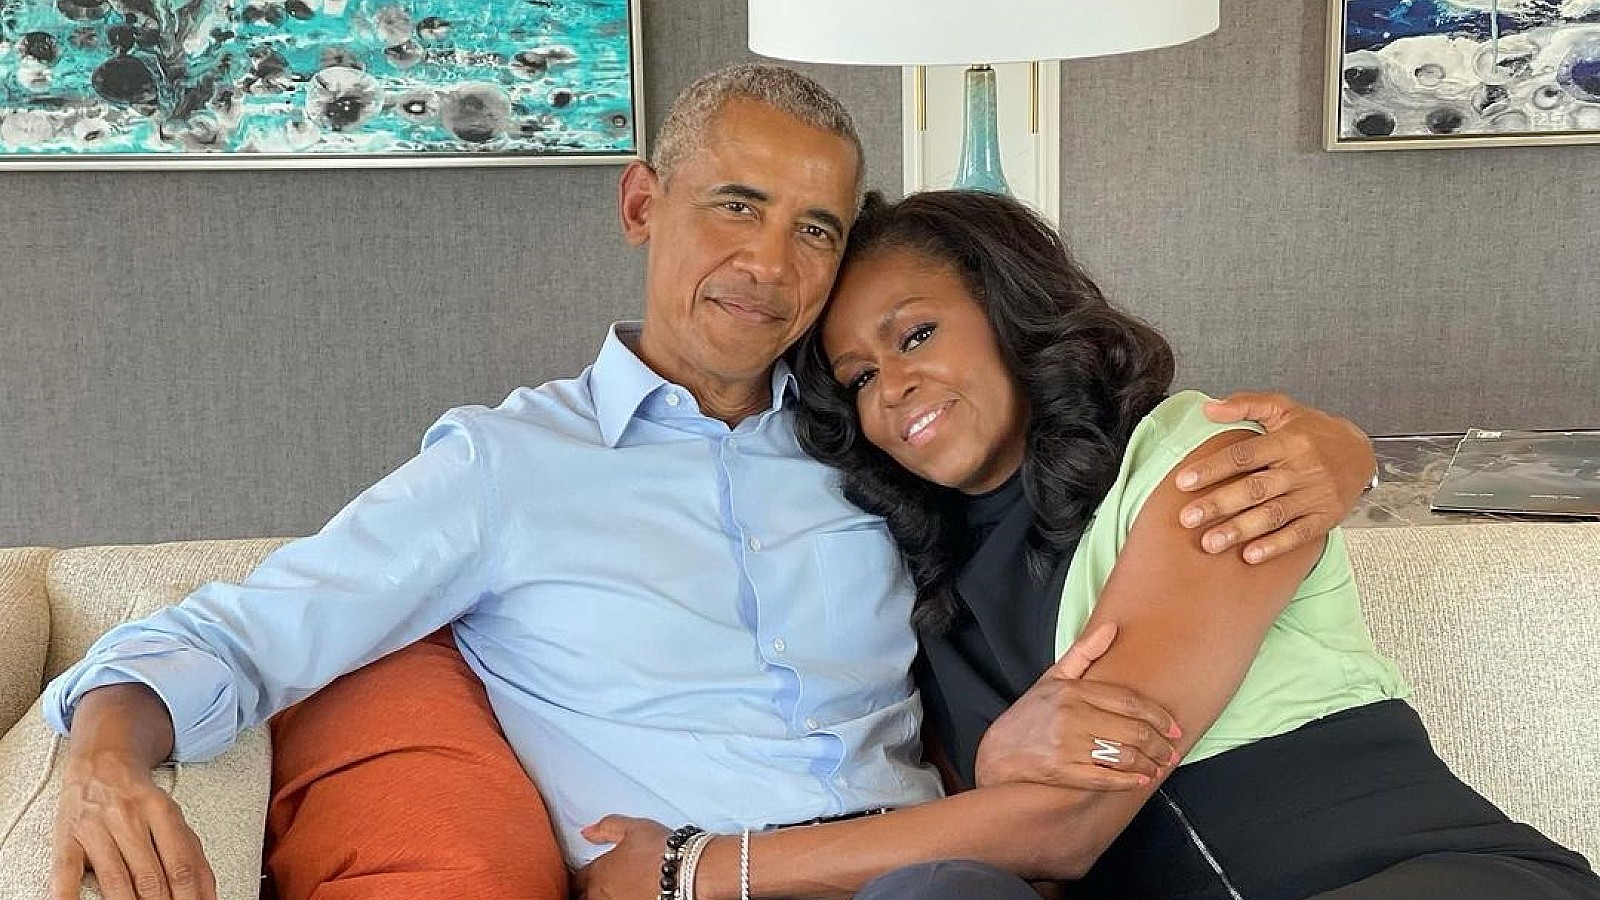 Michelle Obama suelta revelación matrimonial: "No lo soportaba"